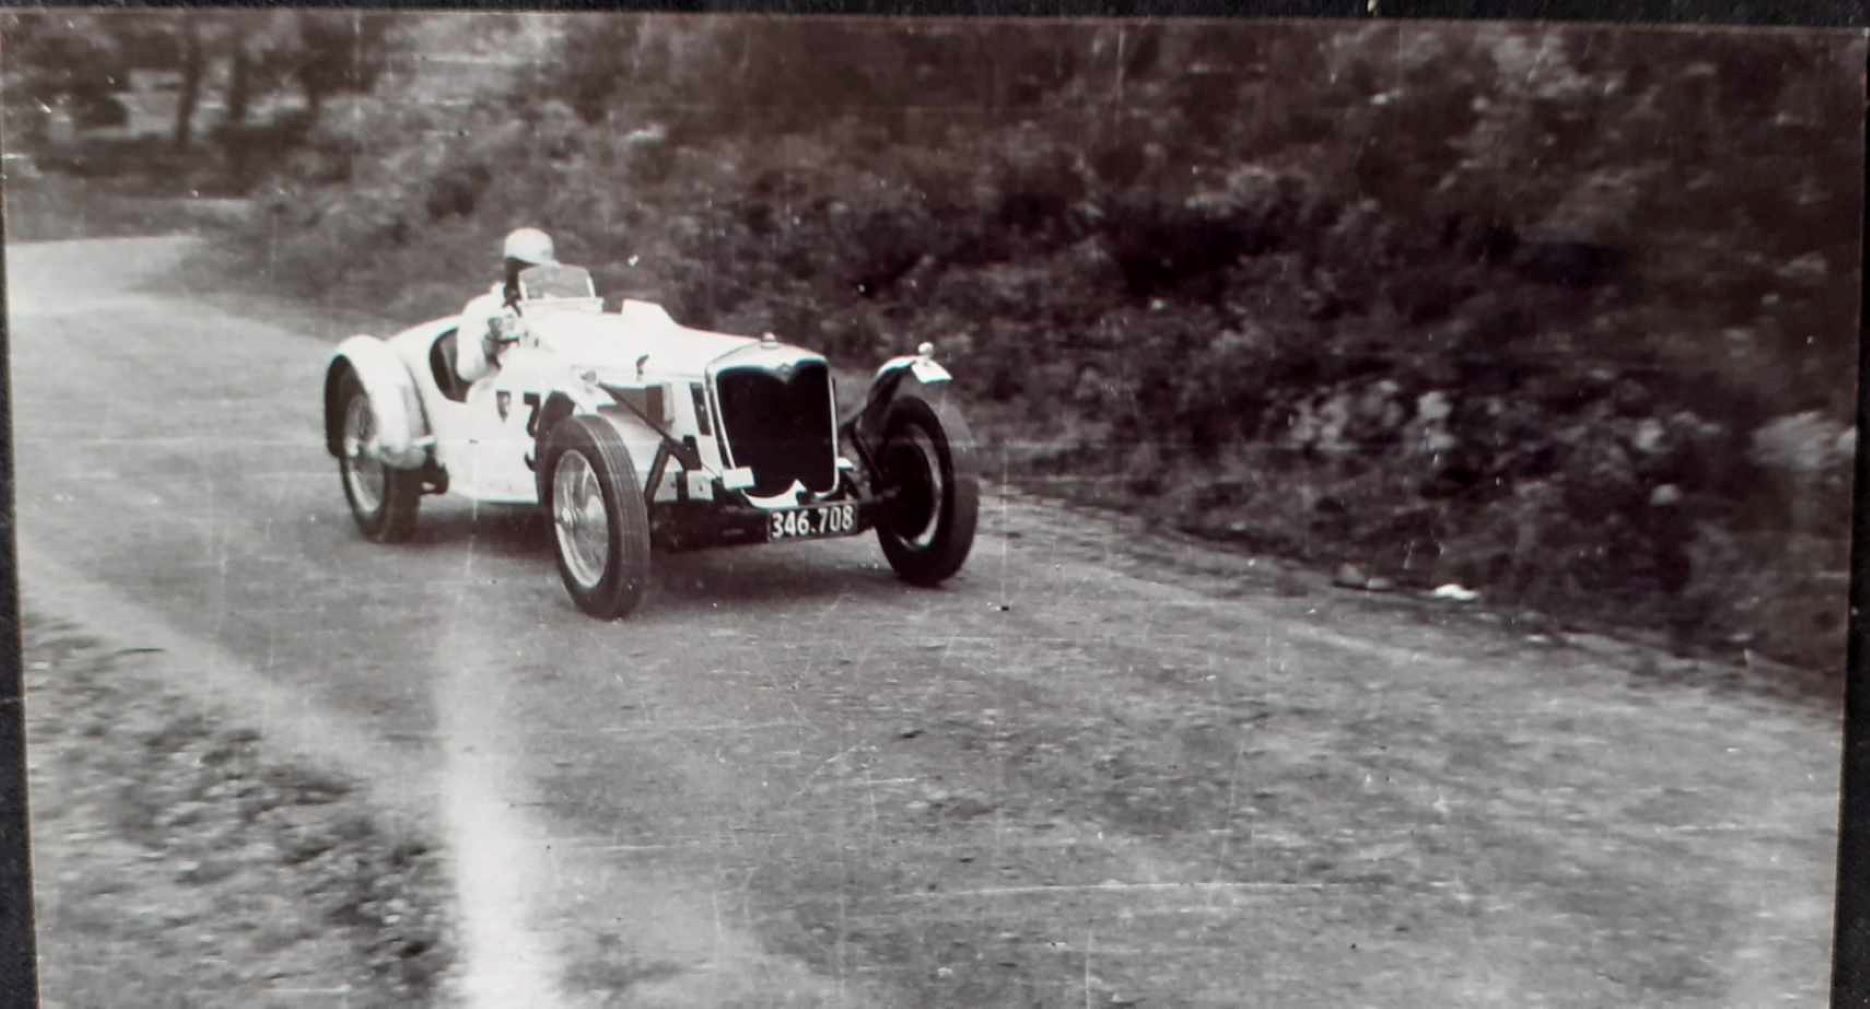 Name:  NSCC 1950 #0122 Riley Race #3 Q at Hill Climb - 346.708 1951 -56 plate 1950's - image Graeme Wel.jpg
Views: 165
Size:  178.4 KB